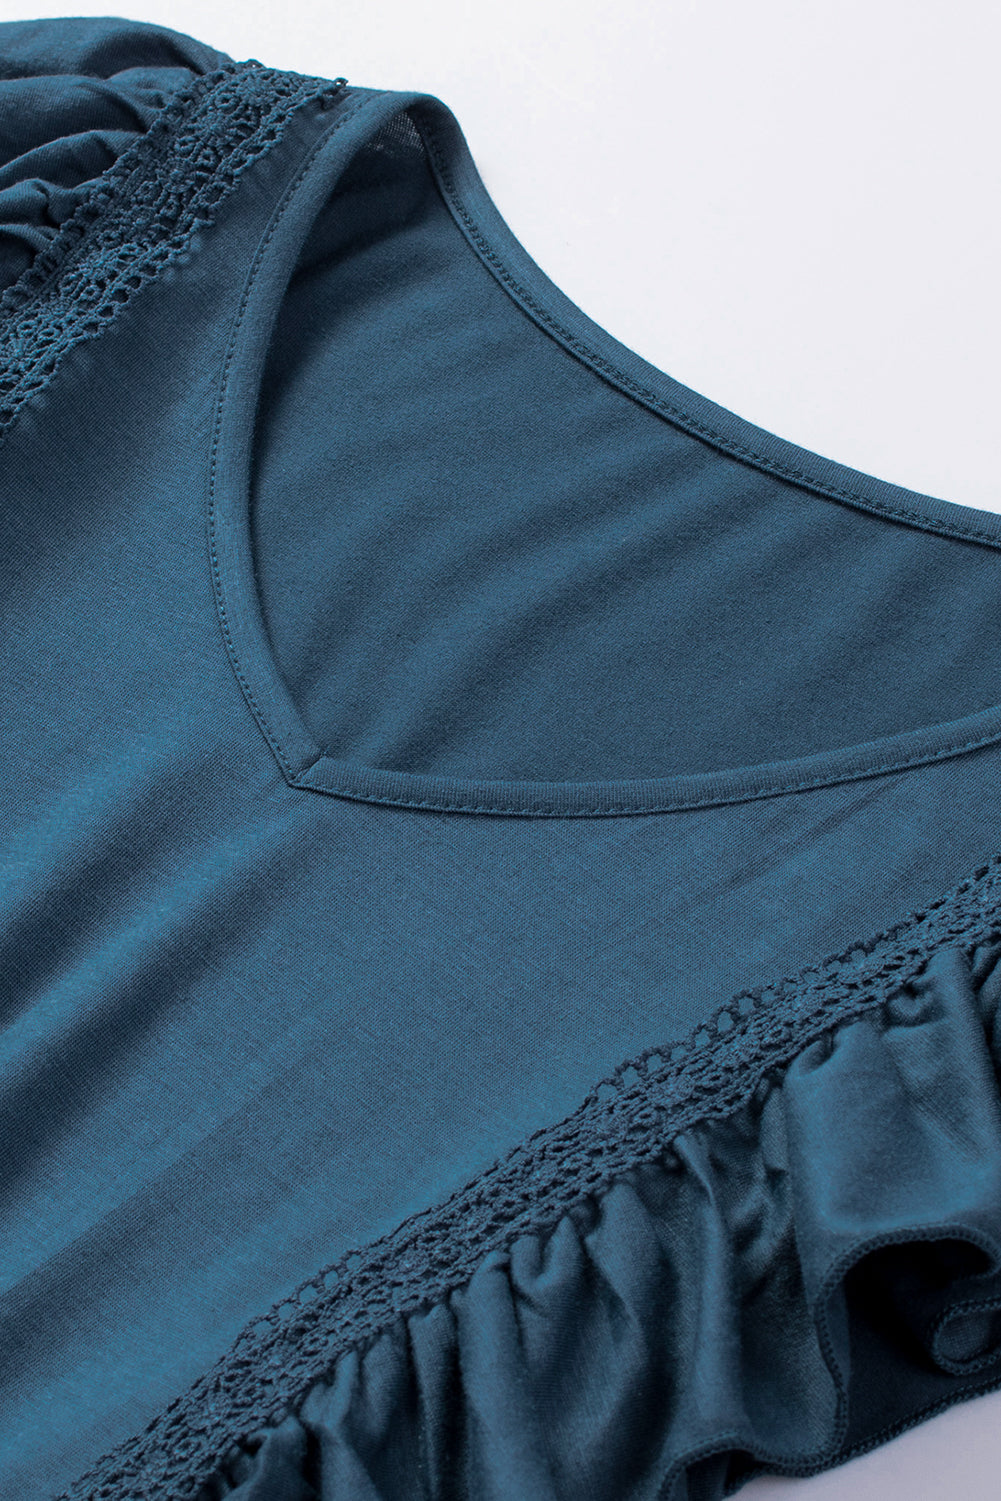 Blue Ruched Flounce V Neck Sleeveless Peplum Top Tank Tops JT's Designer Fashion